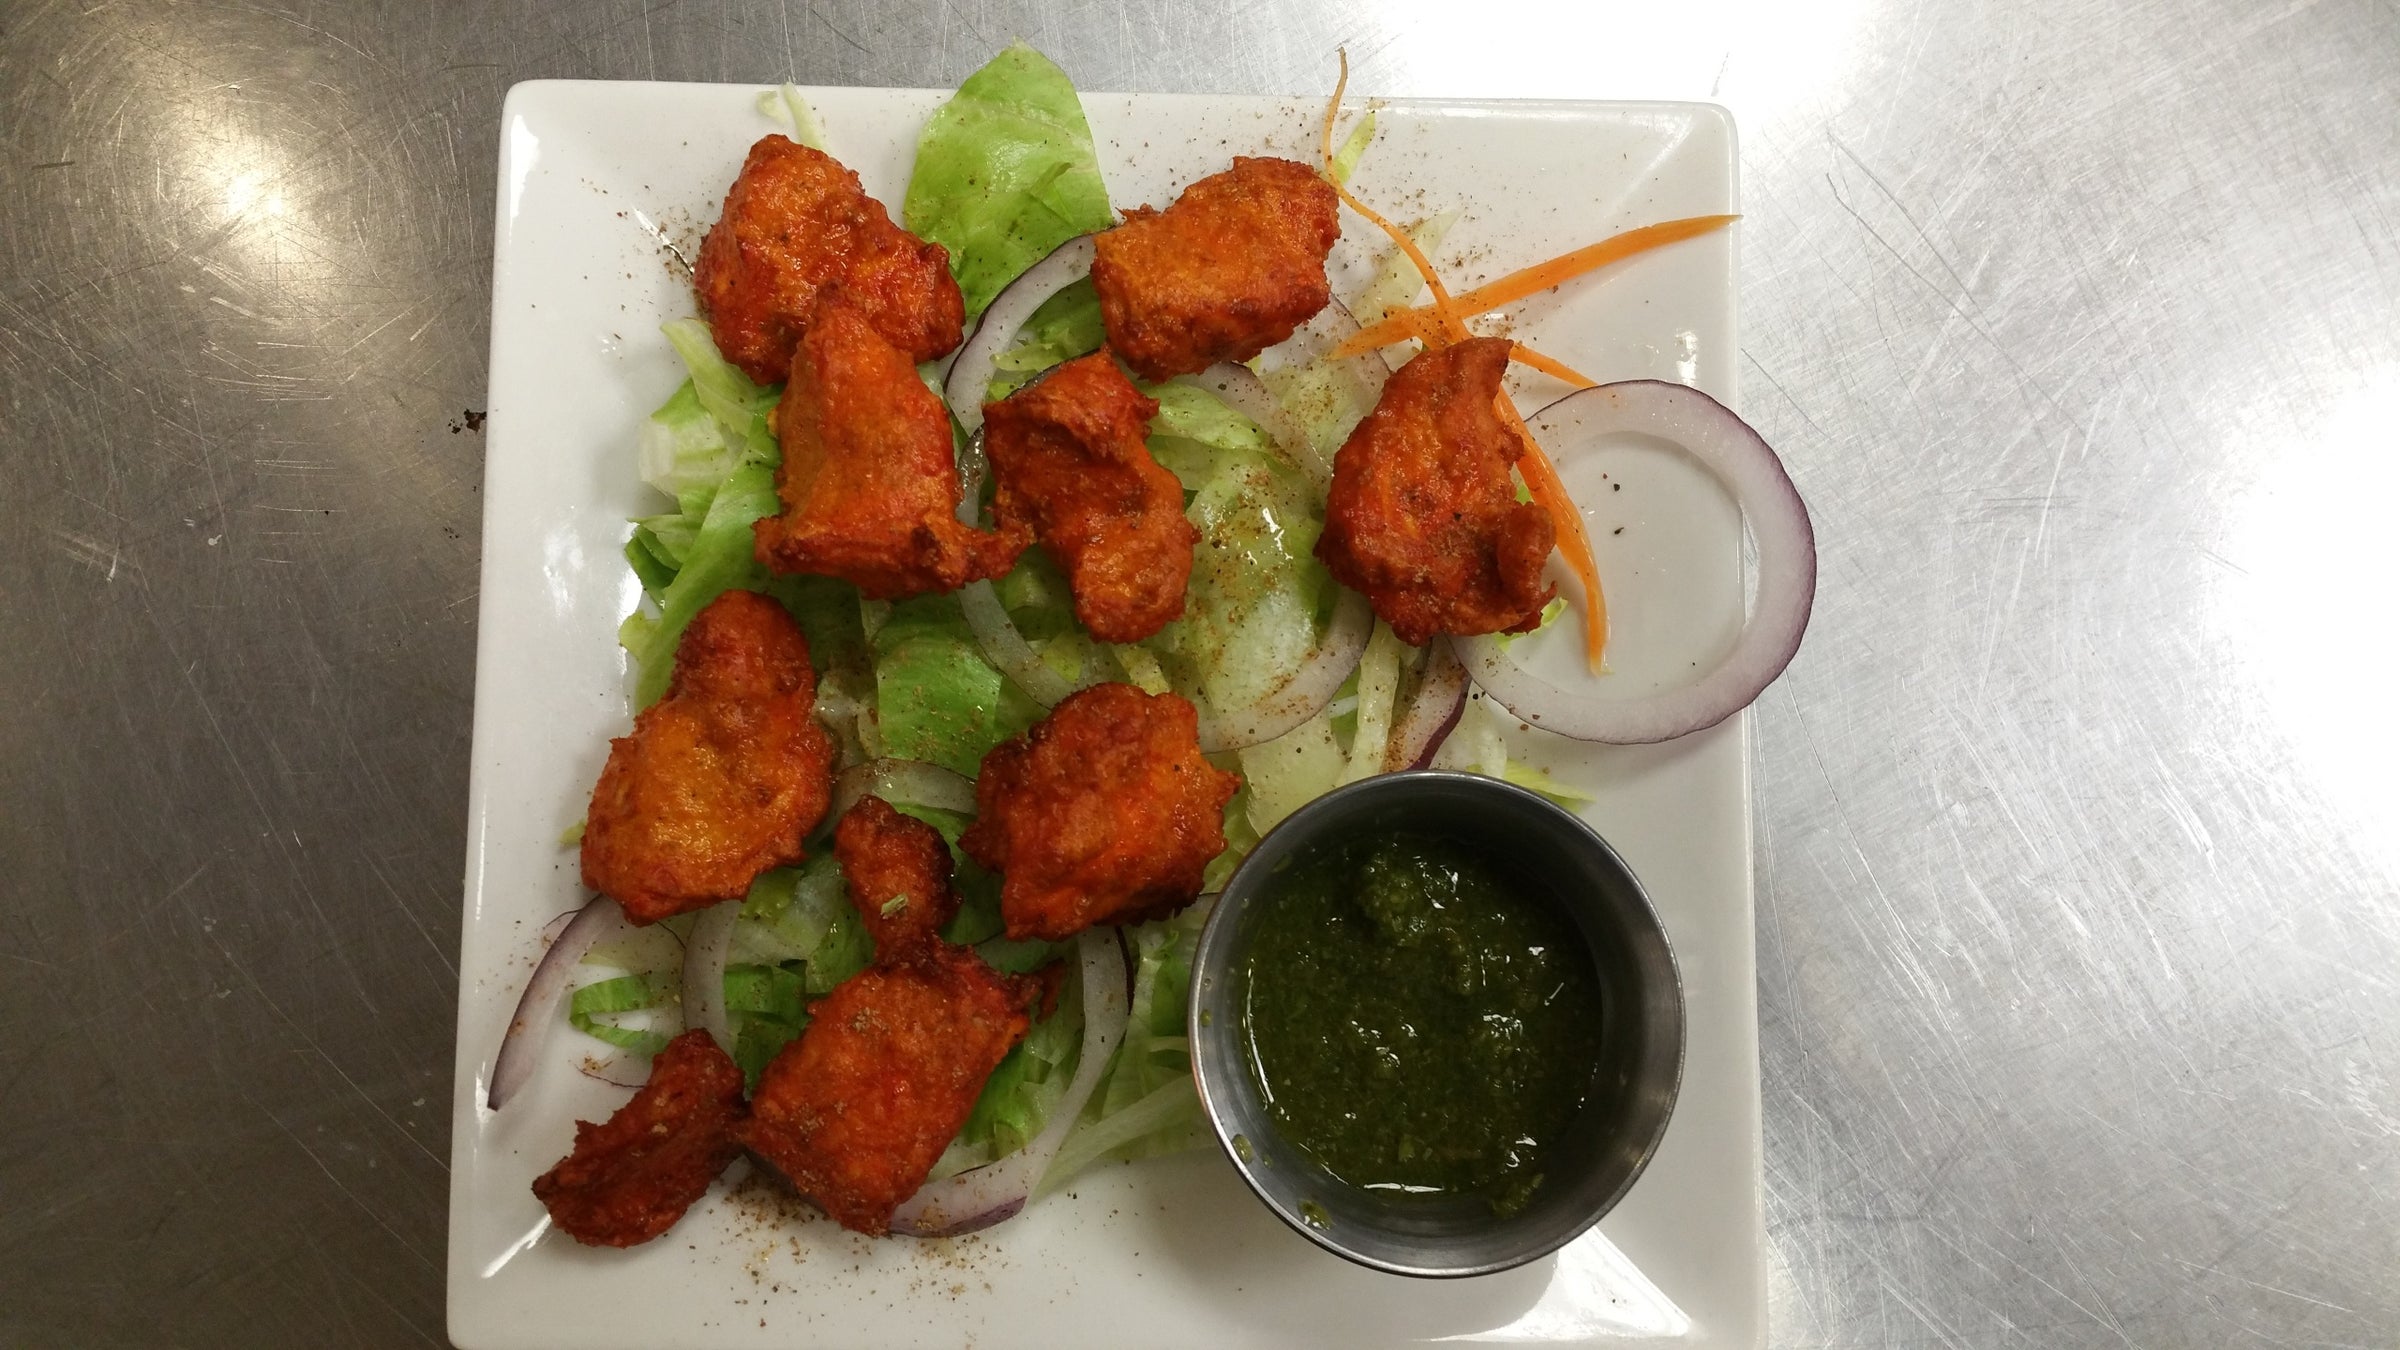 Delicious Indian Food in Tyler, TX - Review of Taj Mahal, Tyler, TX -  Tripadvisor